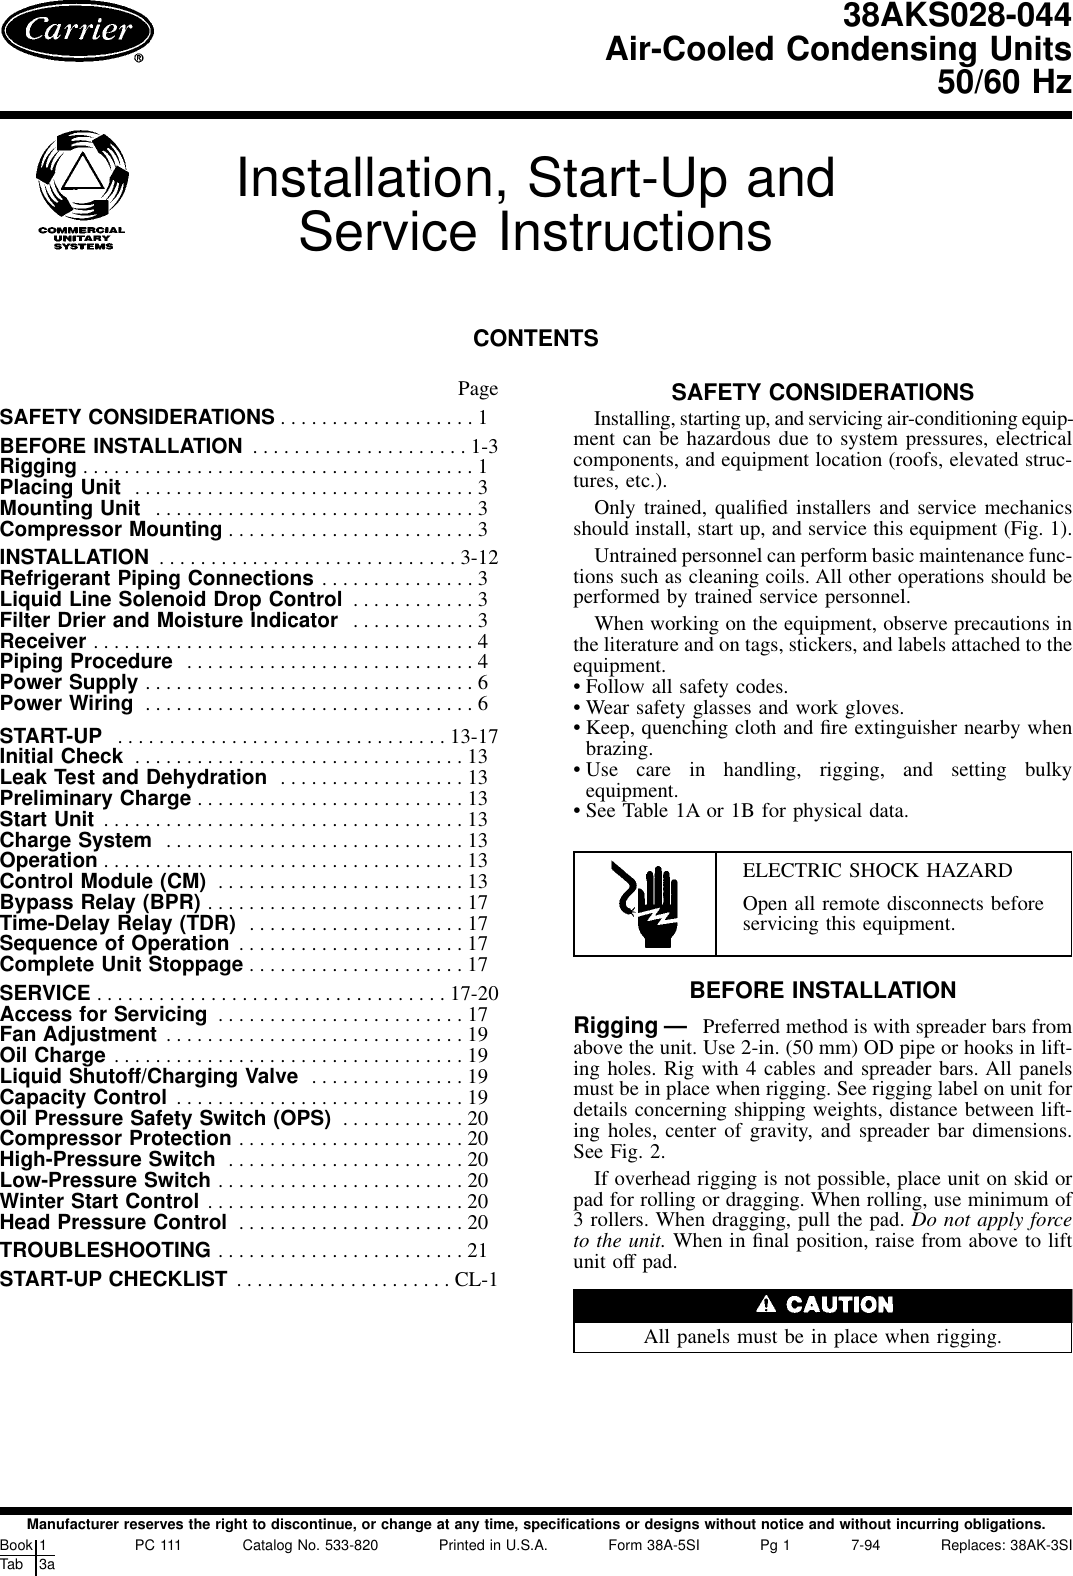 Carrier 38Aks028 044 Users Manual